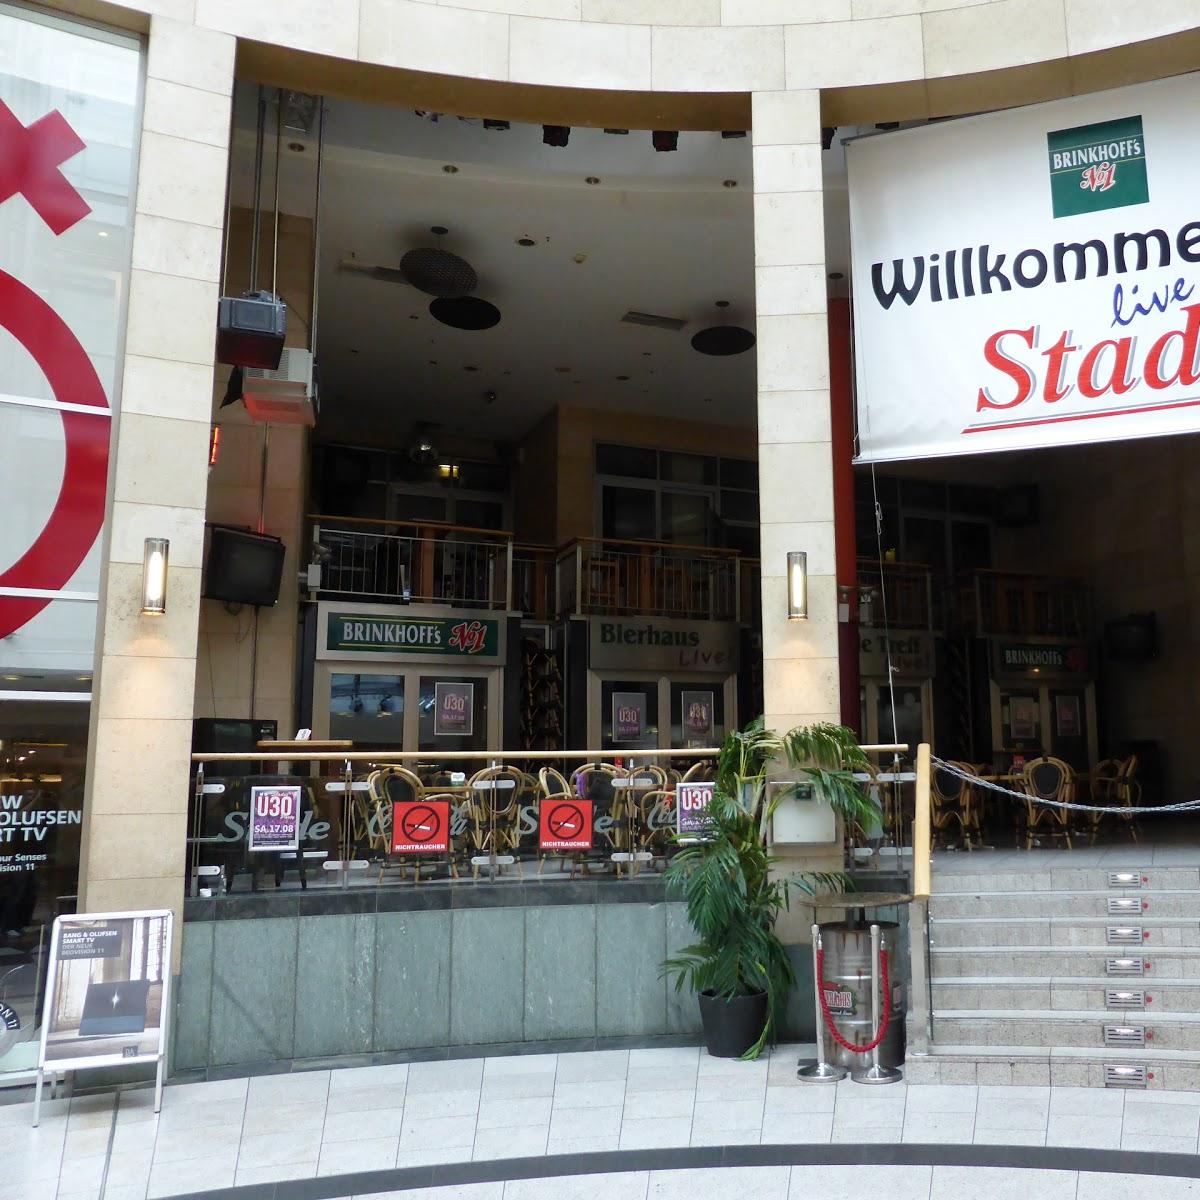 Restaurant "Stade Live" in Dortmund